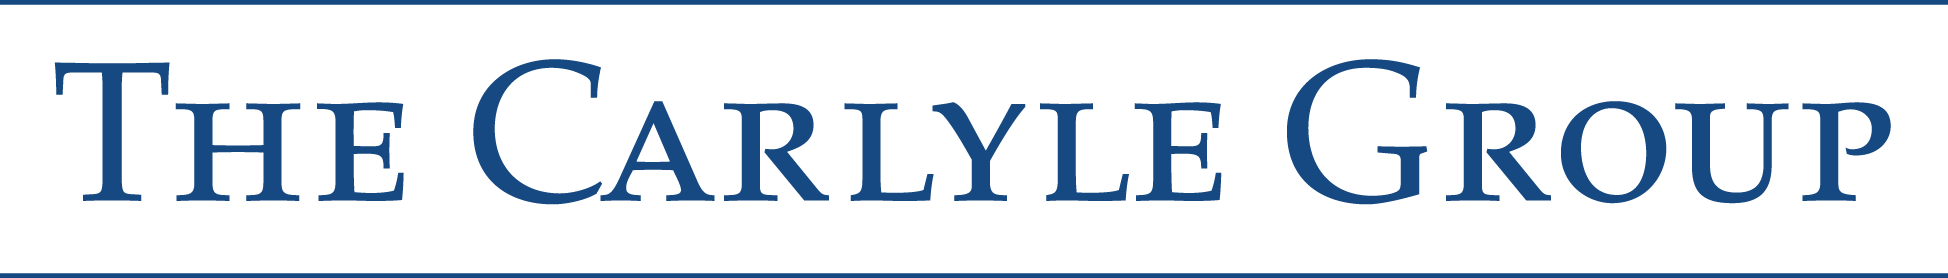 carlyle_group_logo.jpg